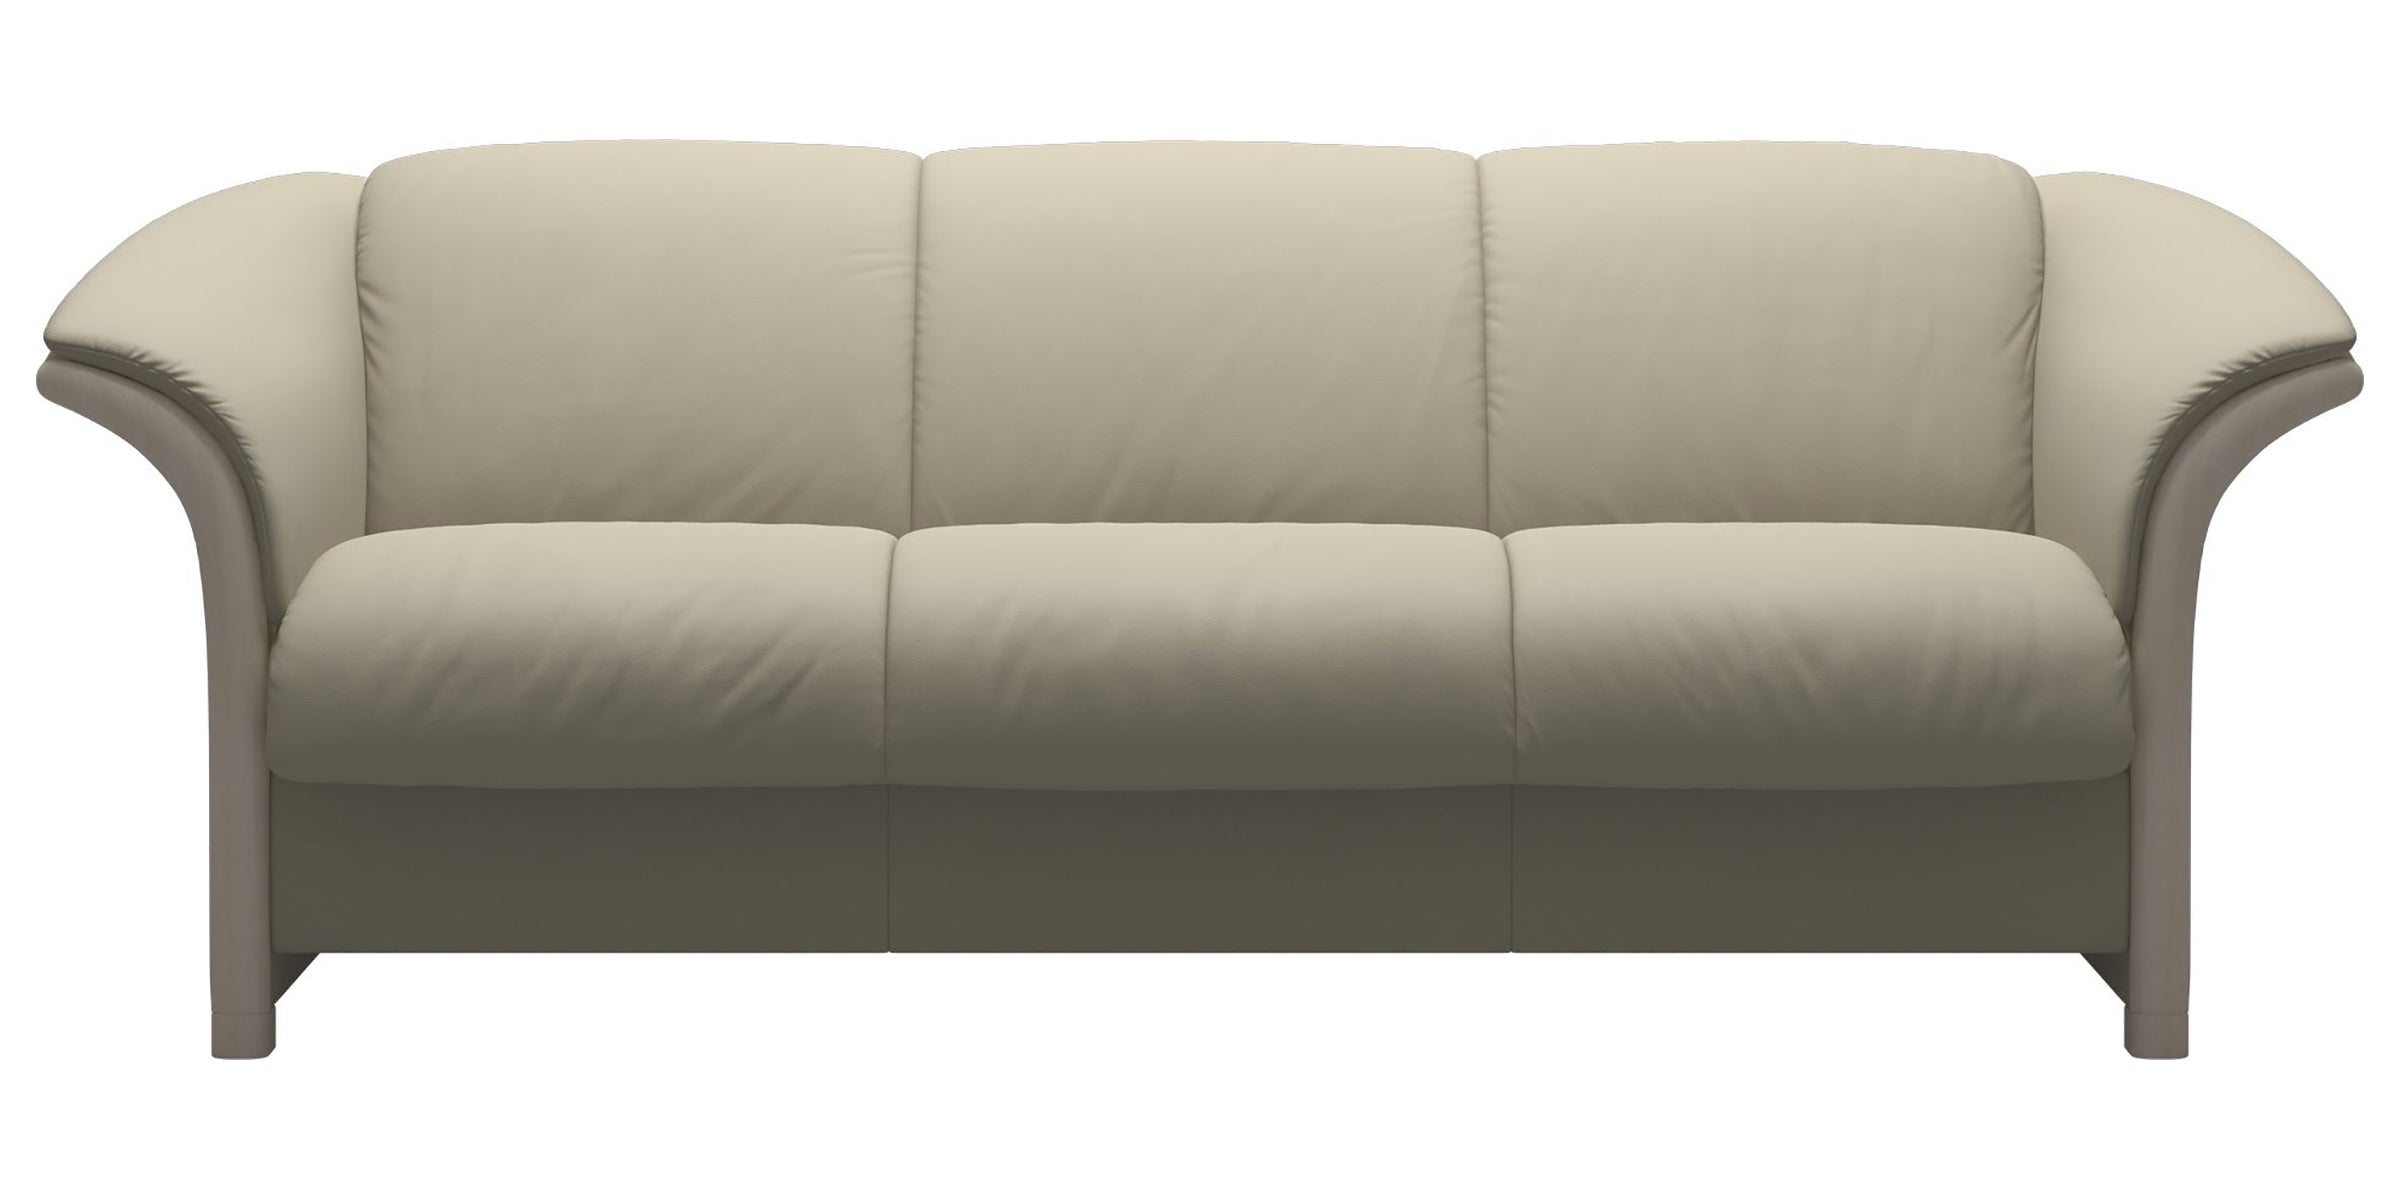 Paloma Leather Light Grey and Whitewash Arm Trim | Stressless Manhattan Sofa | Valley Ridge Furniture